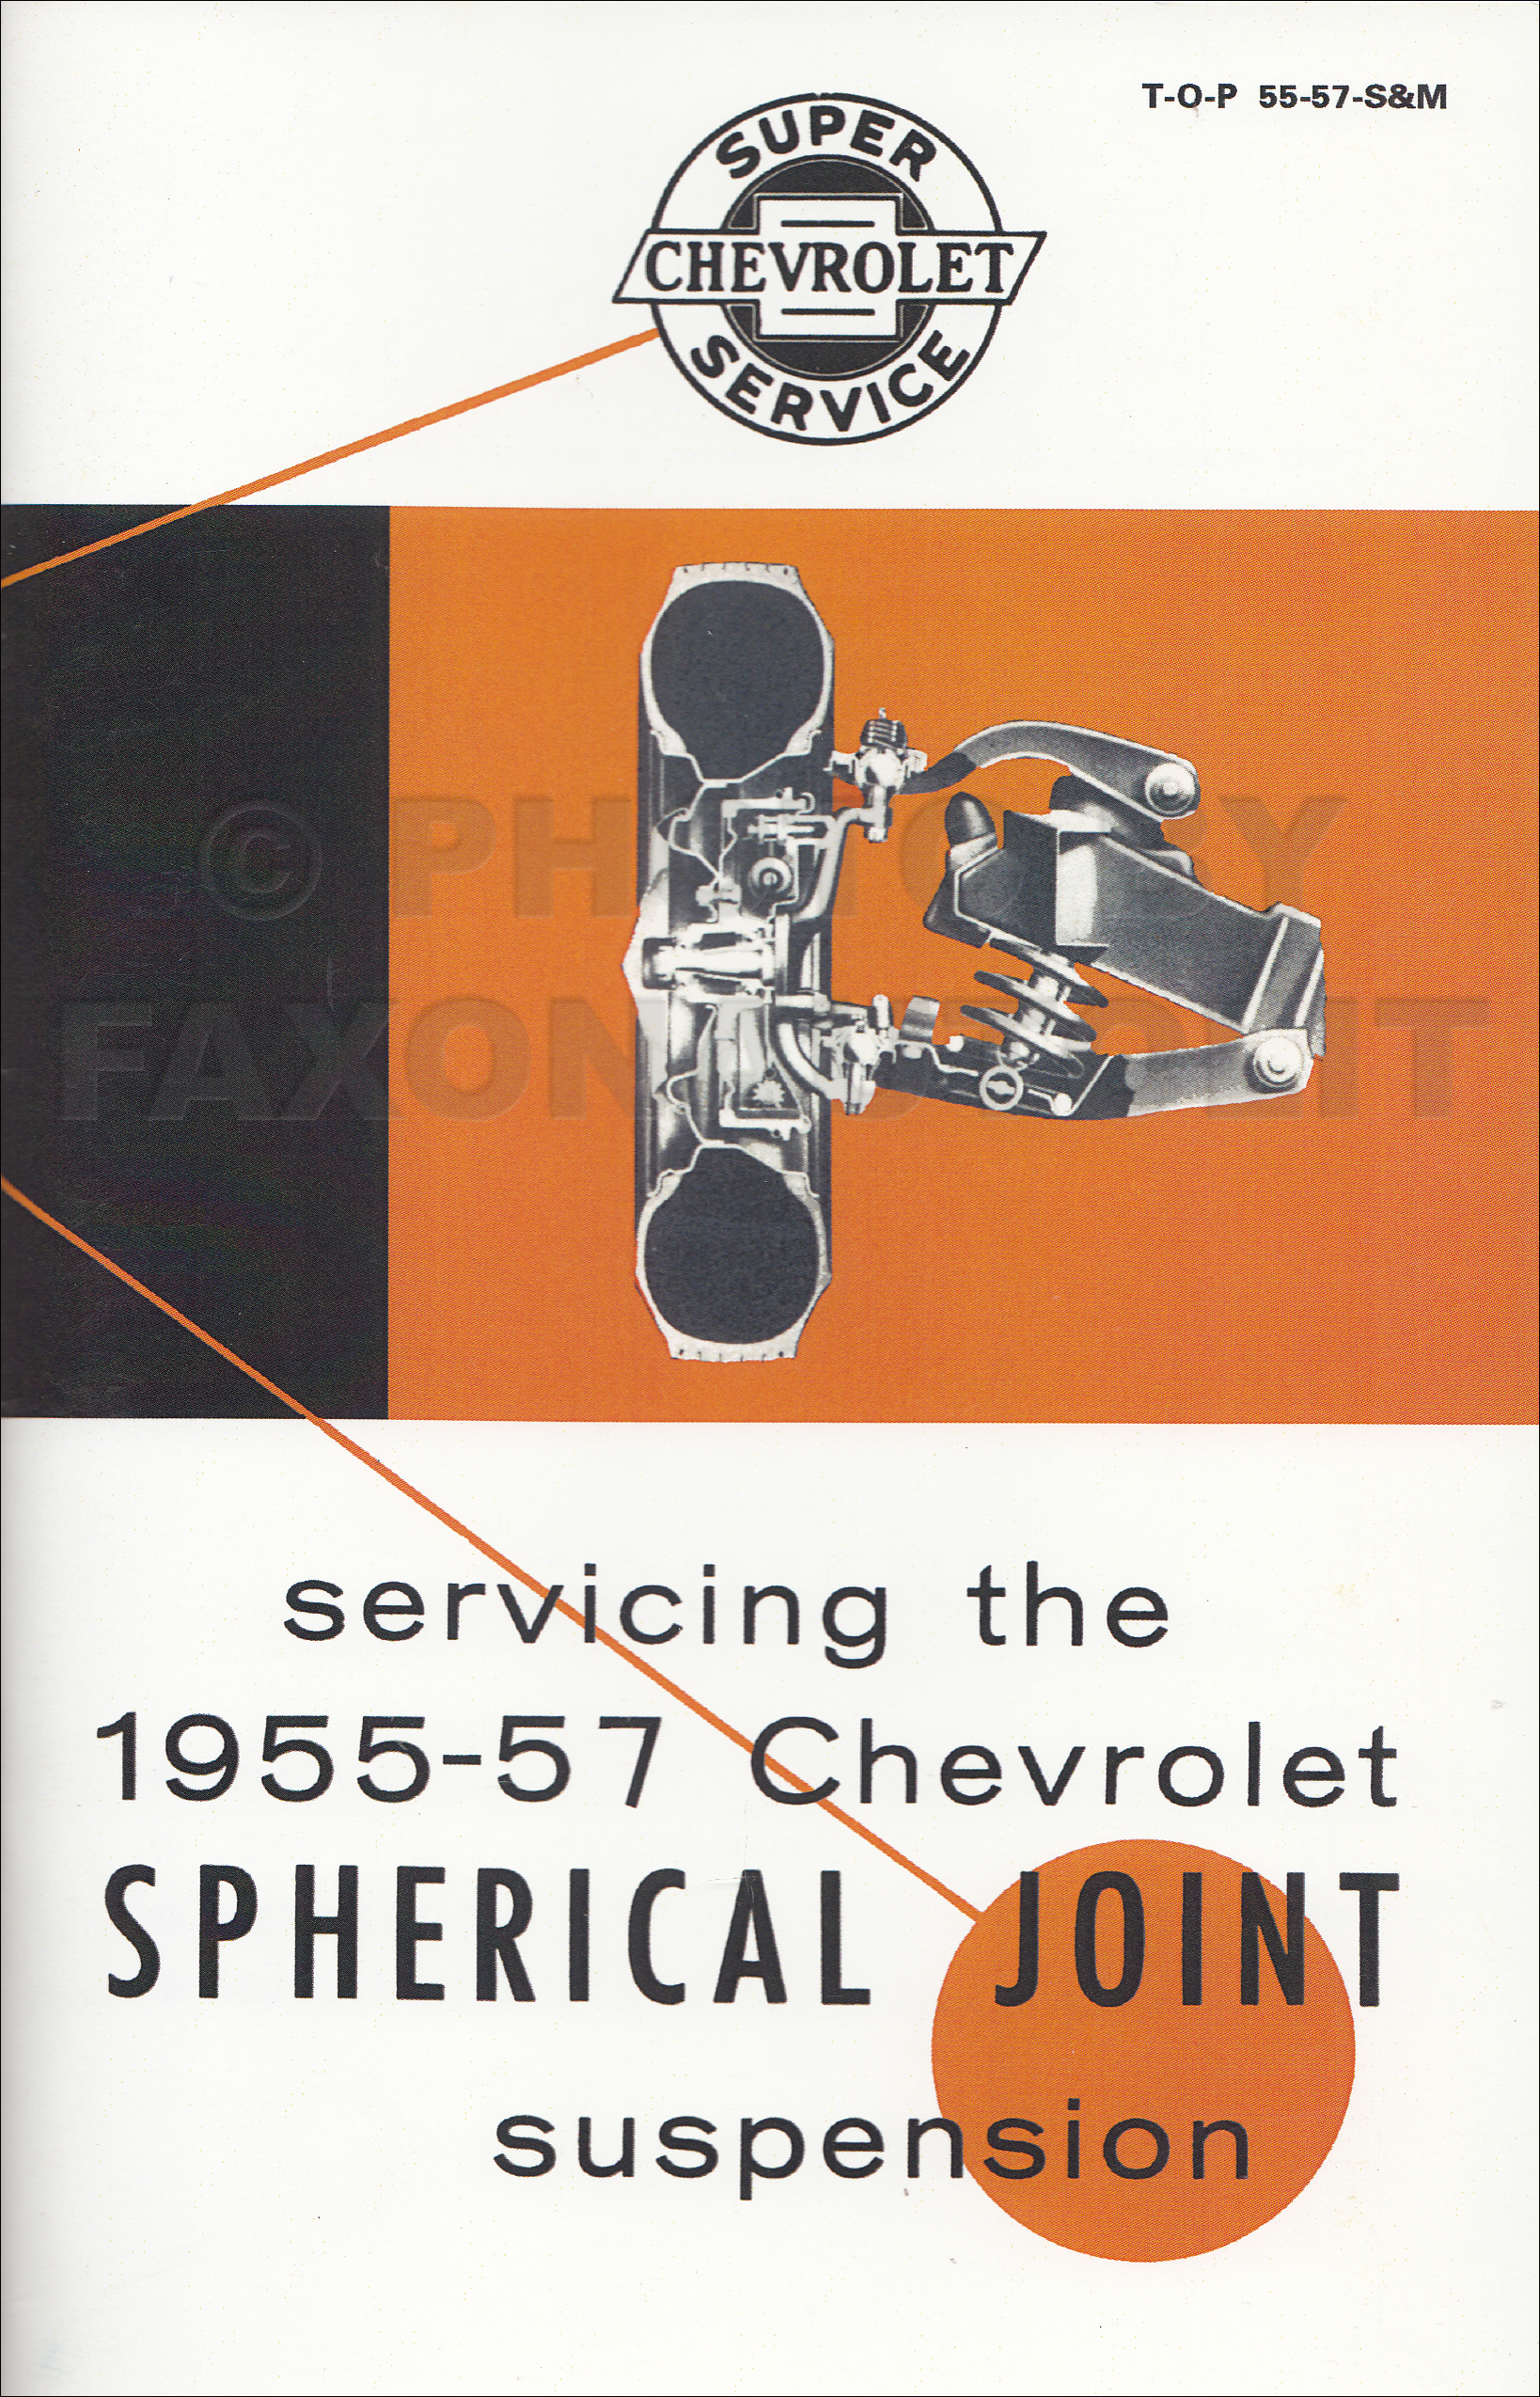 1956 Chevrolet Car Factory Assembly Manual Reprint